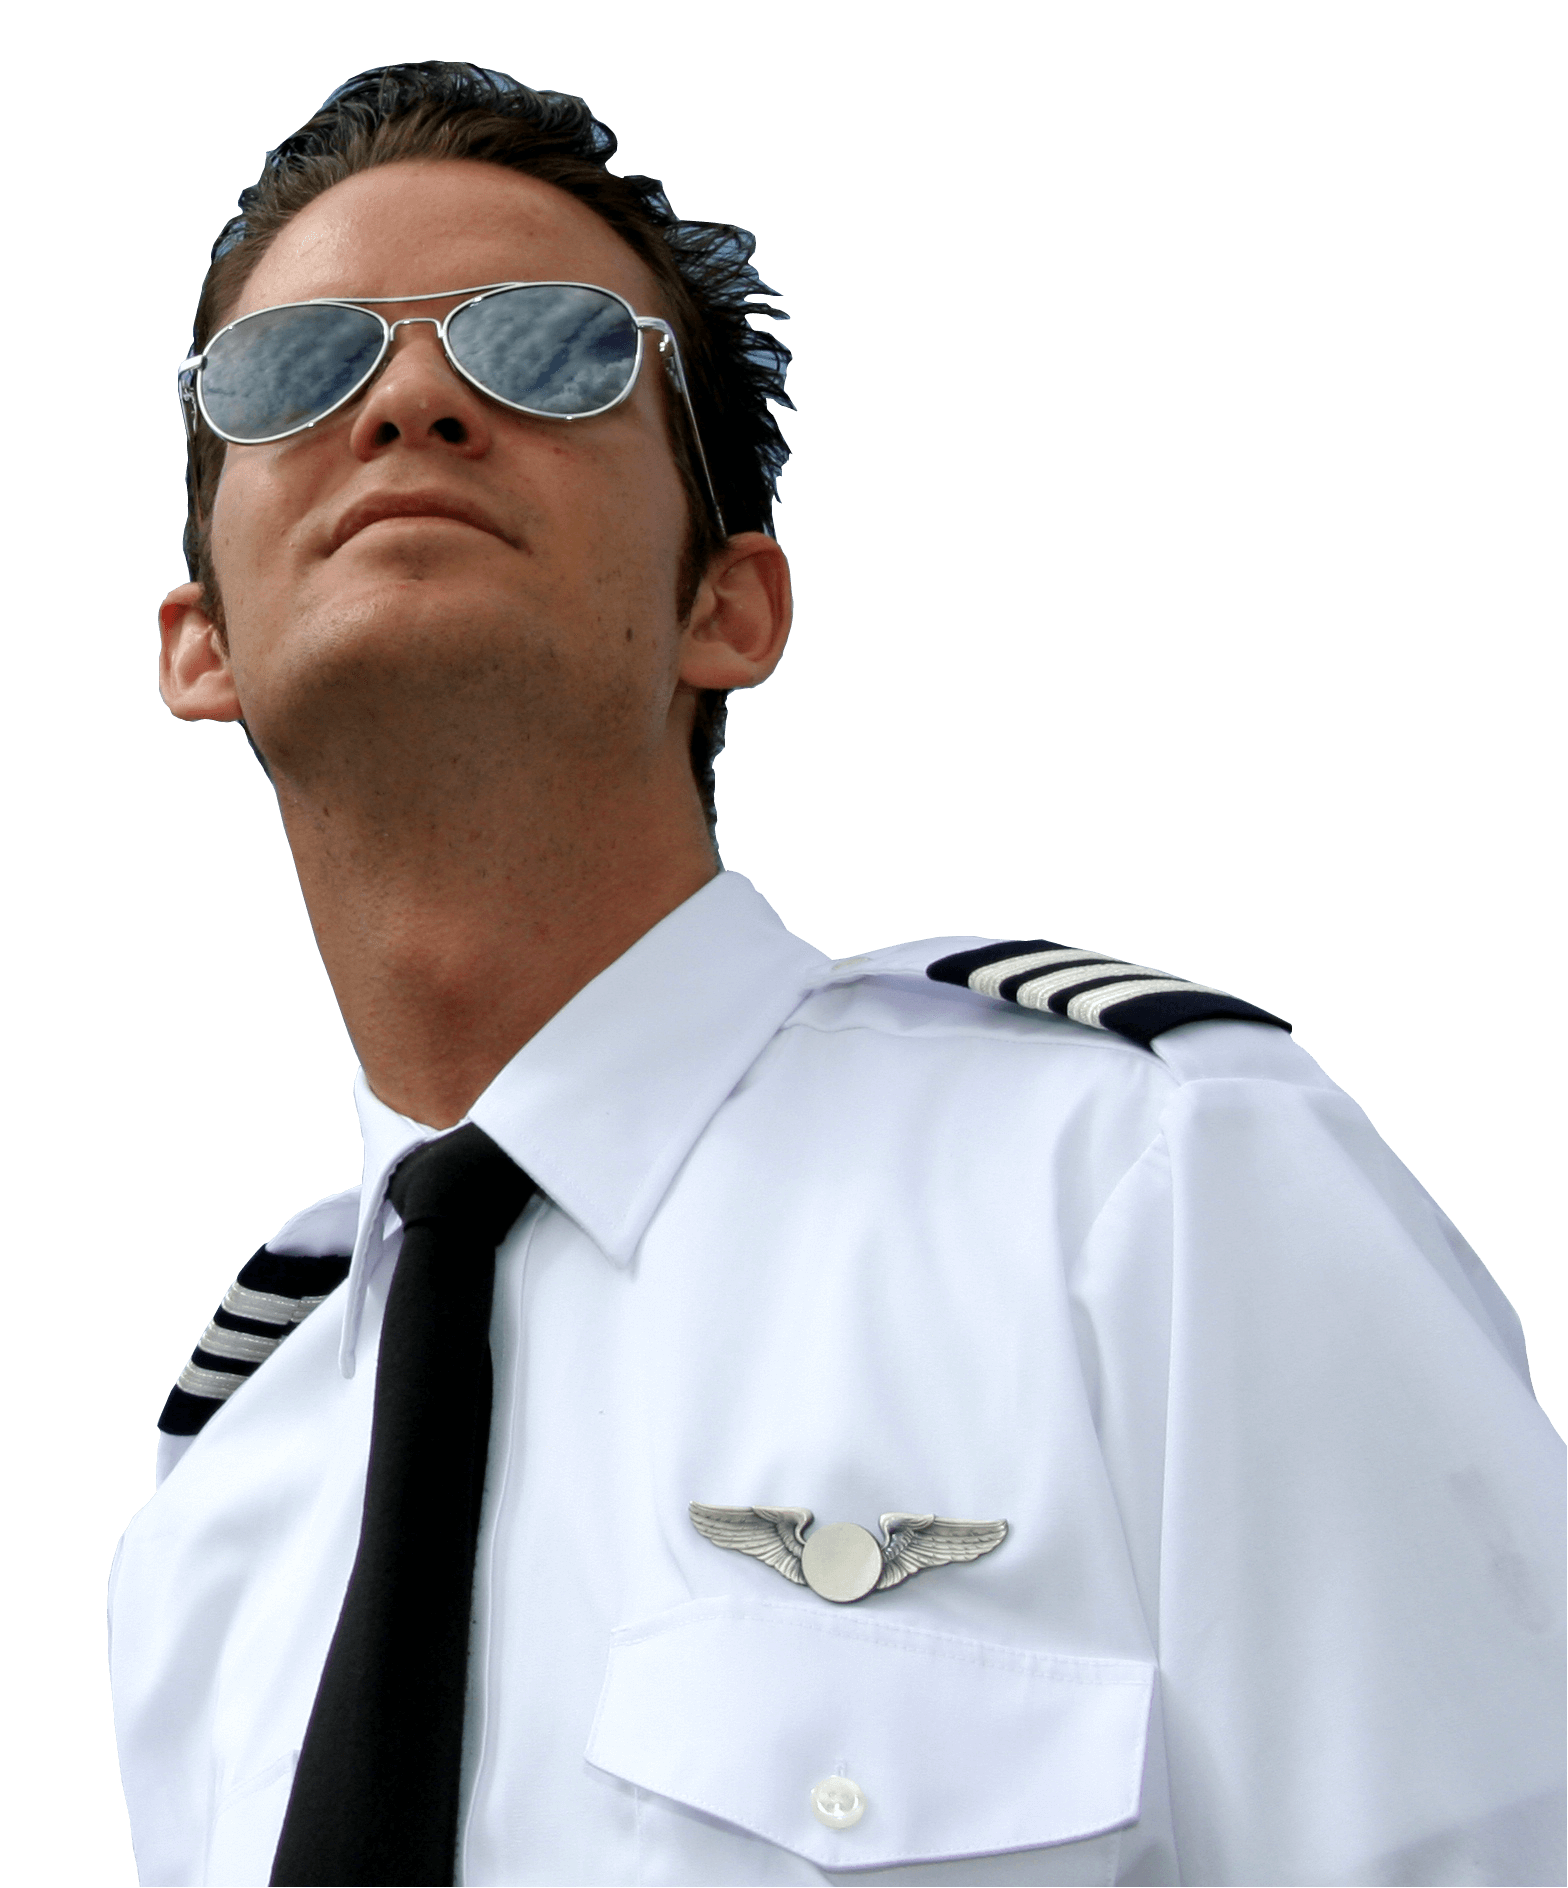 Pilot in sunglasses and uniform